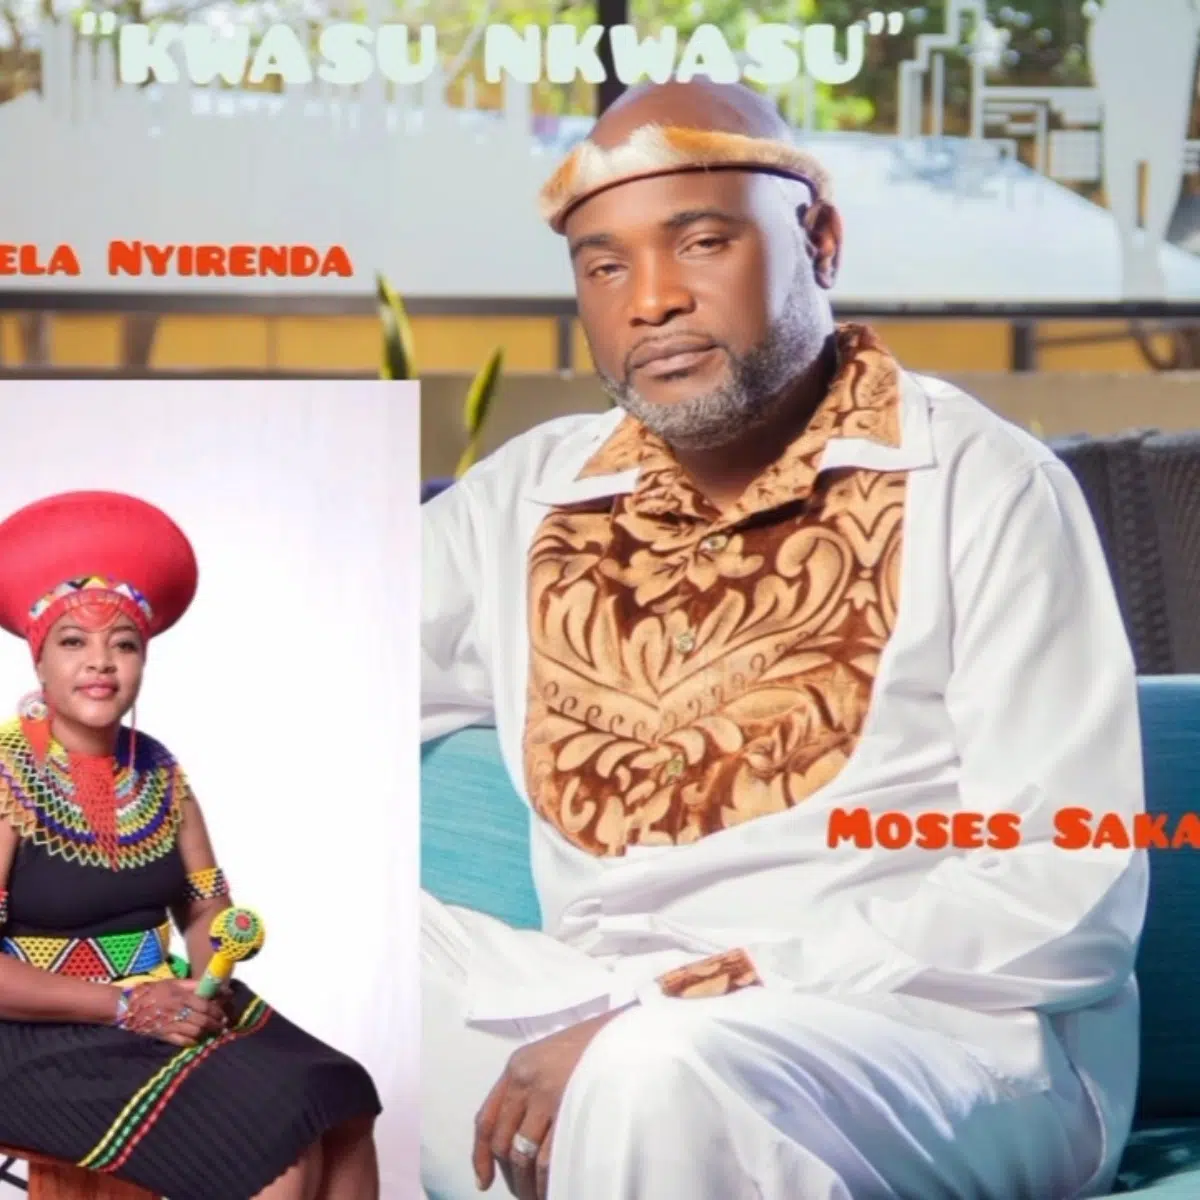 DOWNLOAD: Angela Nyirenda & Moses Sakala – “Kwasu Nkwasu” Mp3